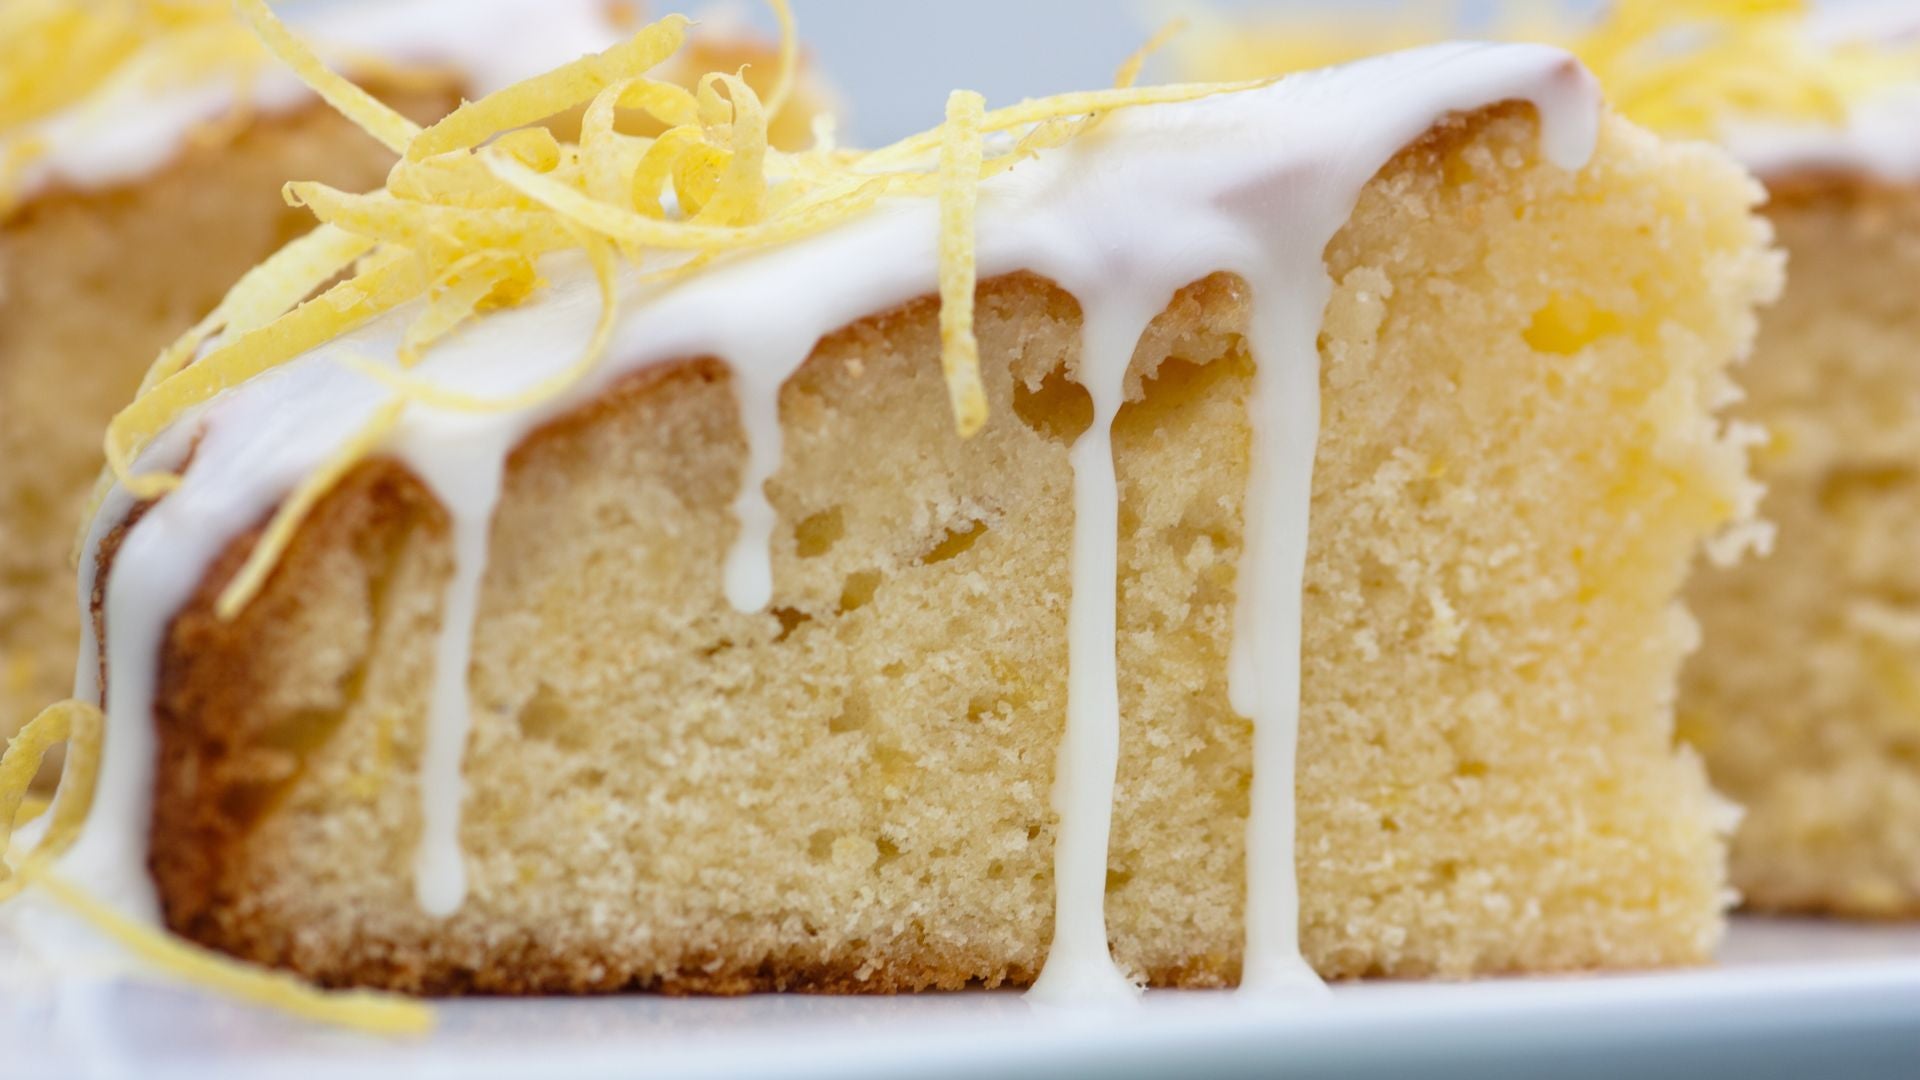 lemon-olive-oil-cake-with-lemon-zest-and-sweet-glaze